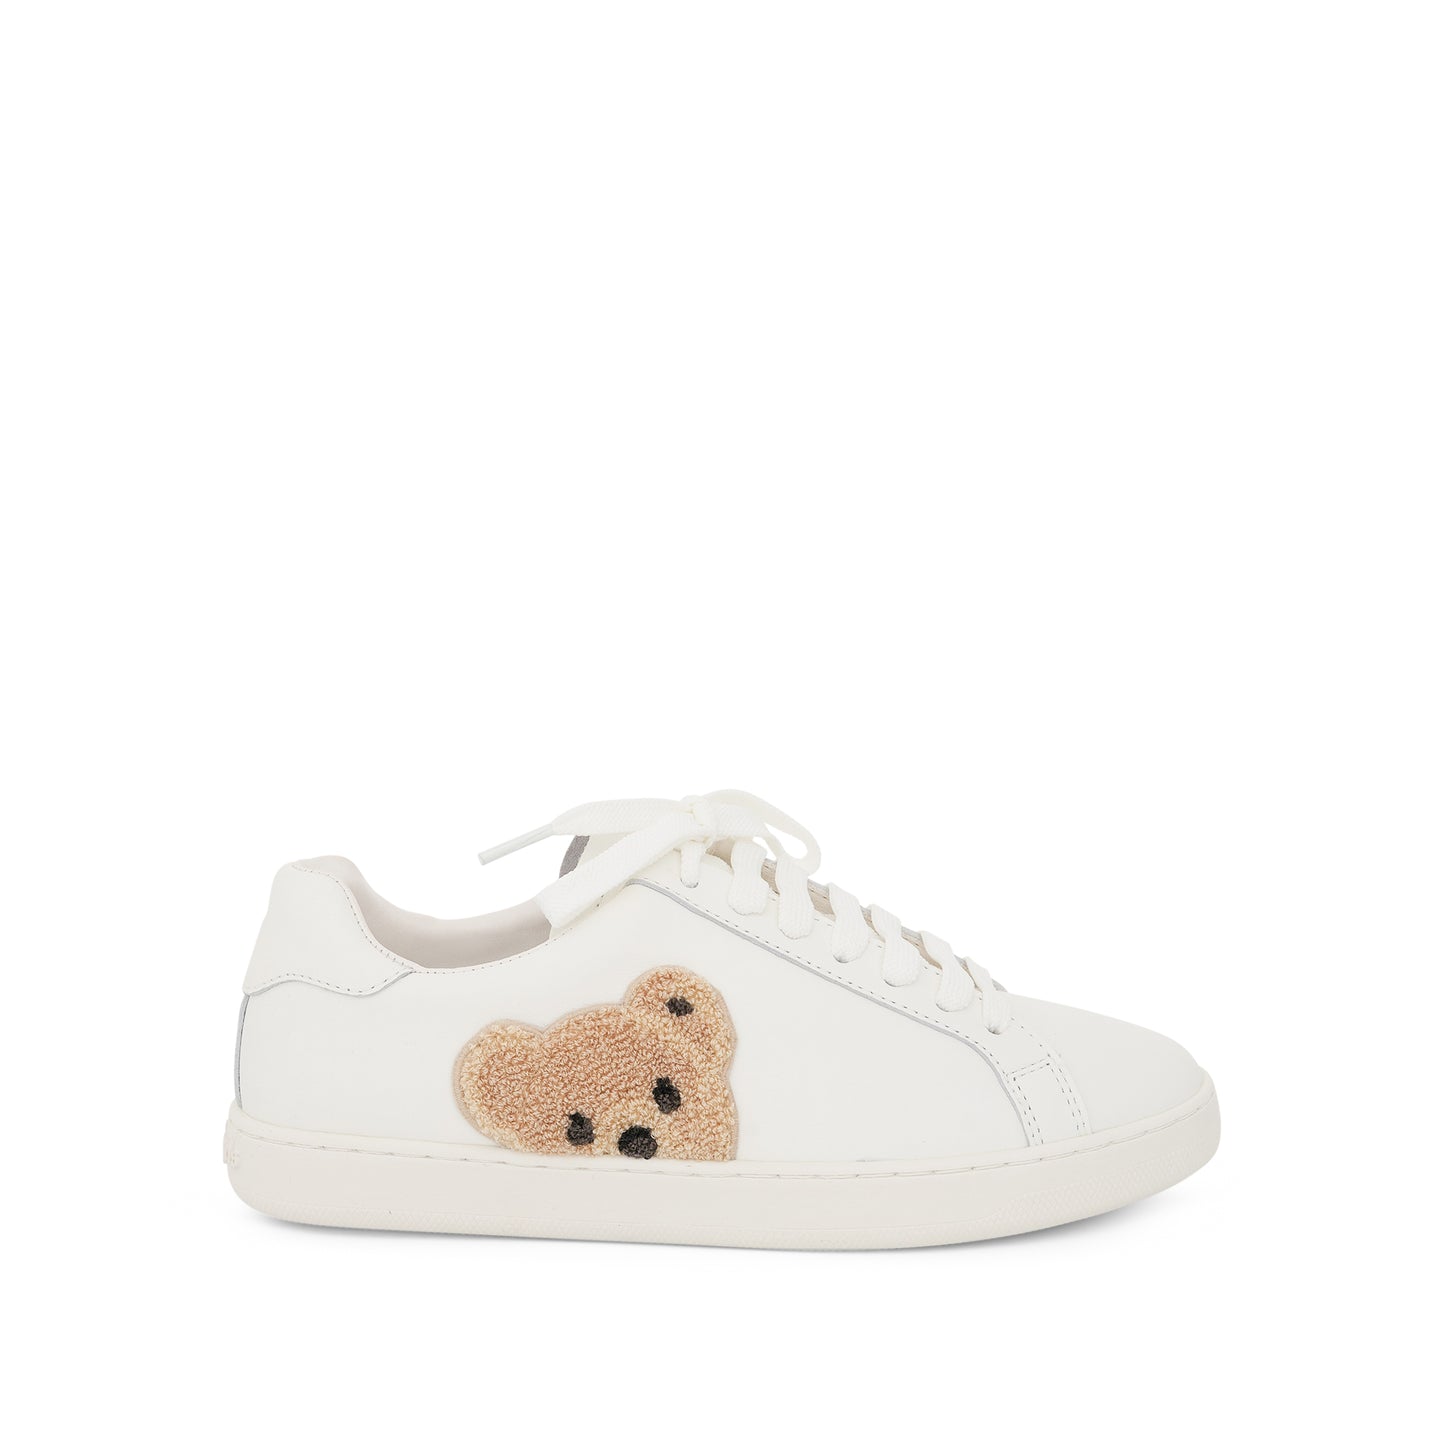 New Teddy Bear Tennis Sneaker in White/Brown